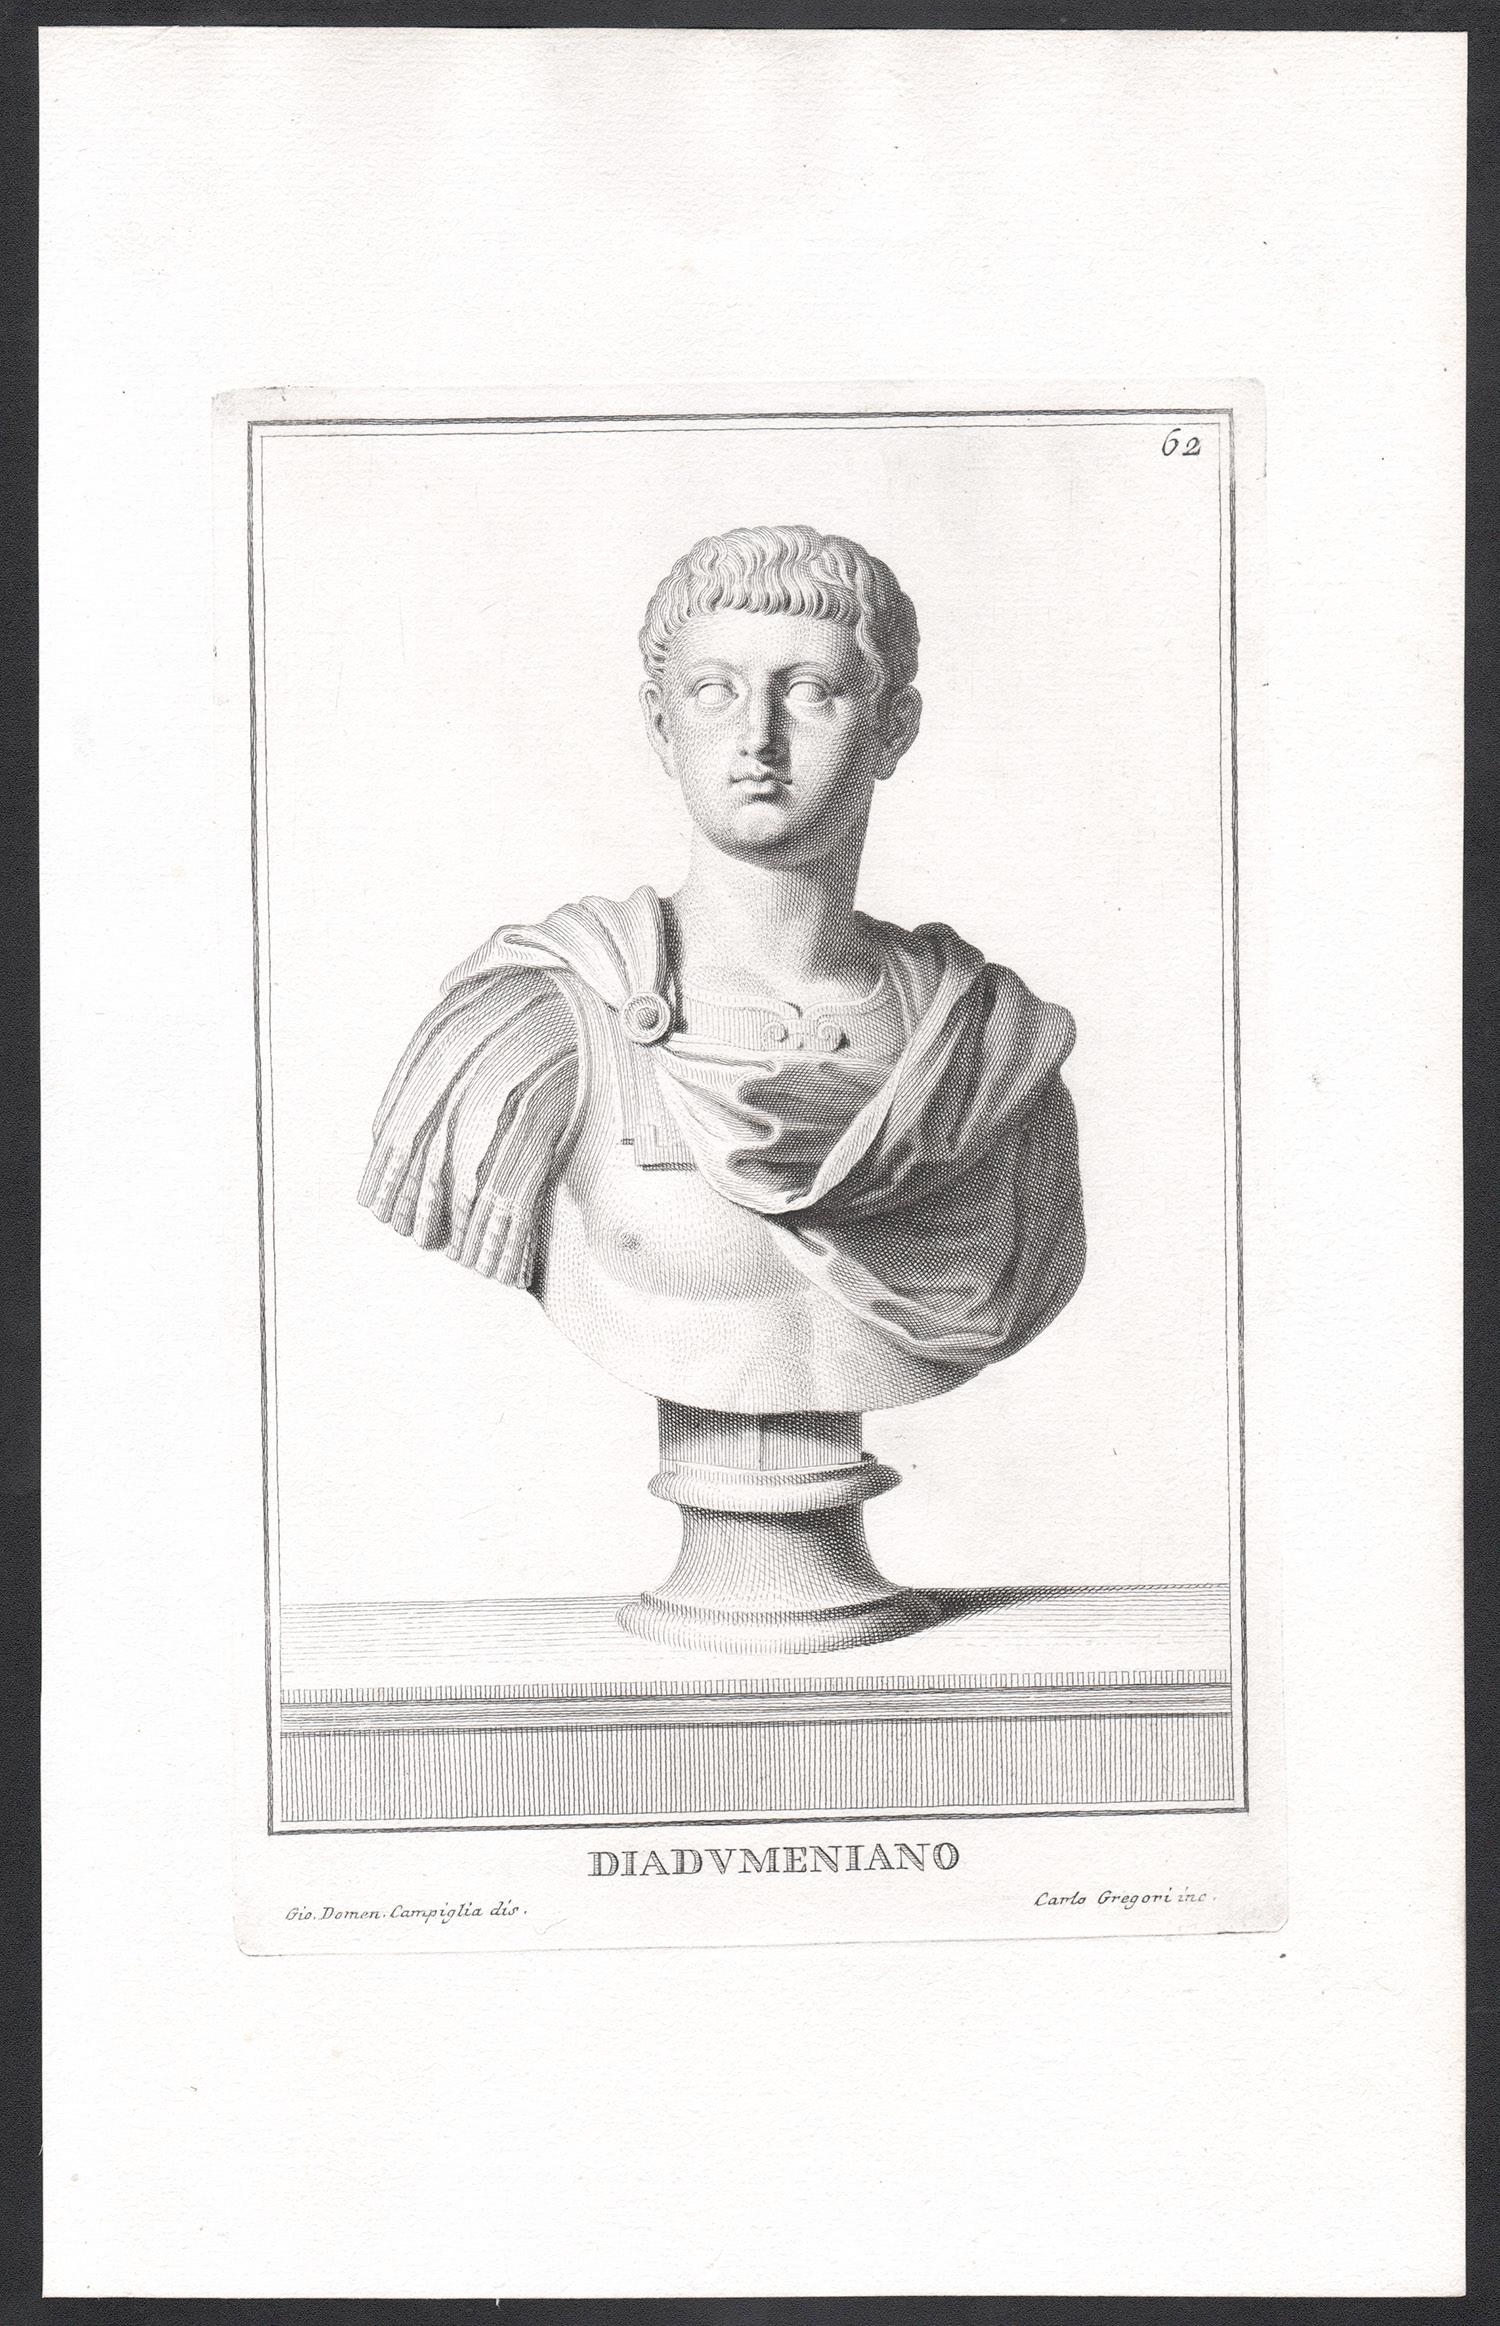 Diadumeniano, Roman sculpture bust C18th Grand Tour engraving, c1750 - Print by Carlo Gregori after Giovanni Domenico Campiglia